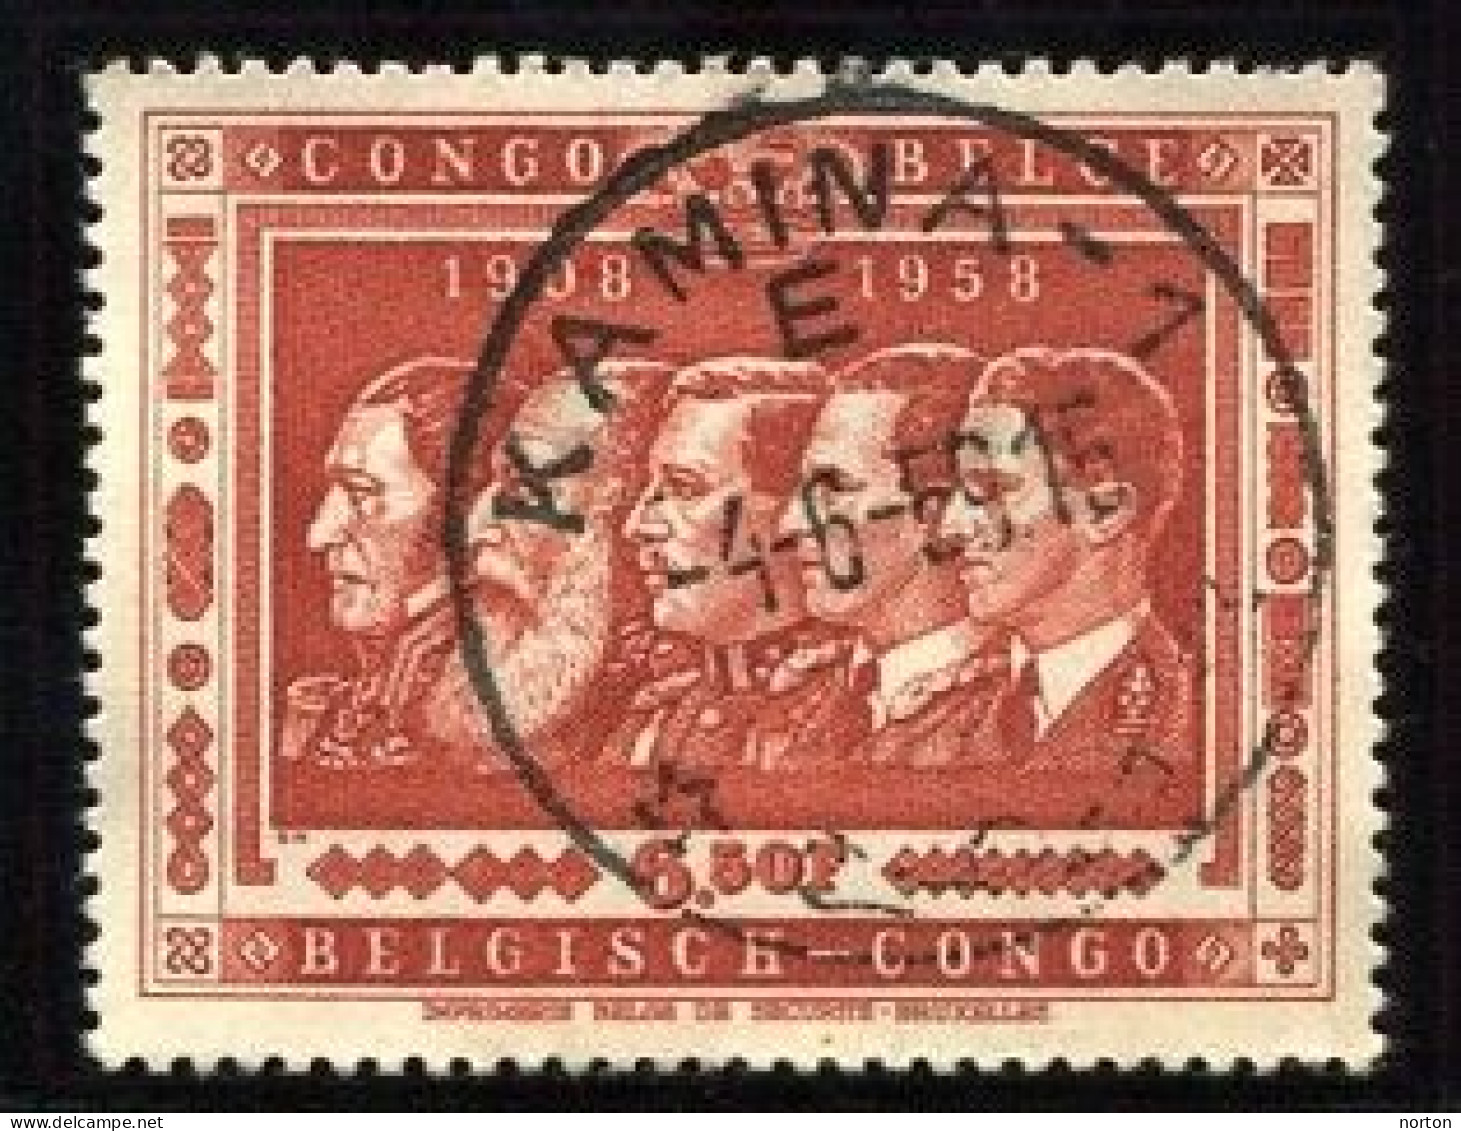 Congo Kamina 1 Oblit. Keach 11(E)1 Sur C.0.B. 348 Le 04/06/1959 - Used Stamps